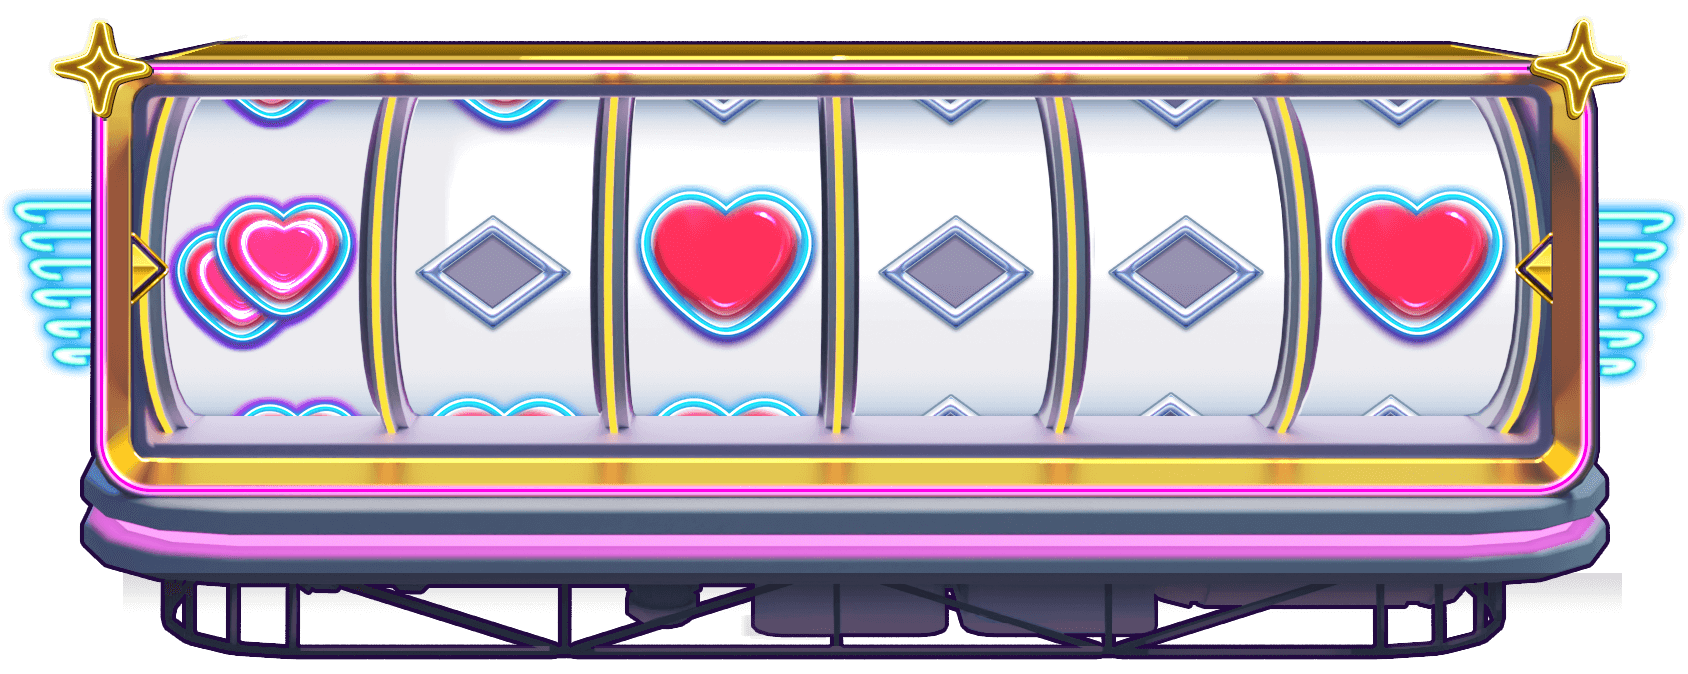 Heart Slot Feature 